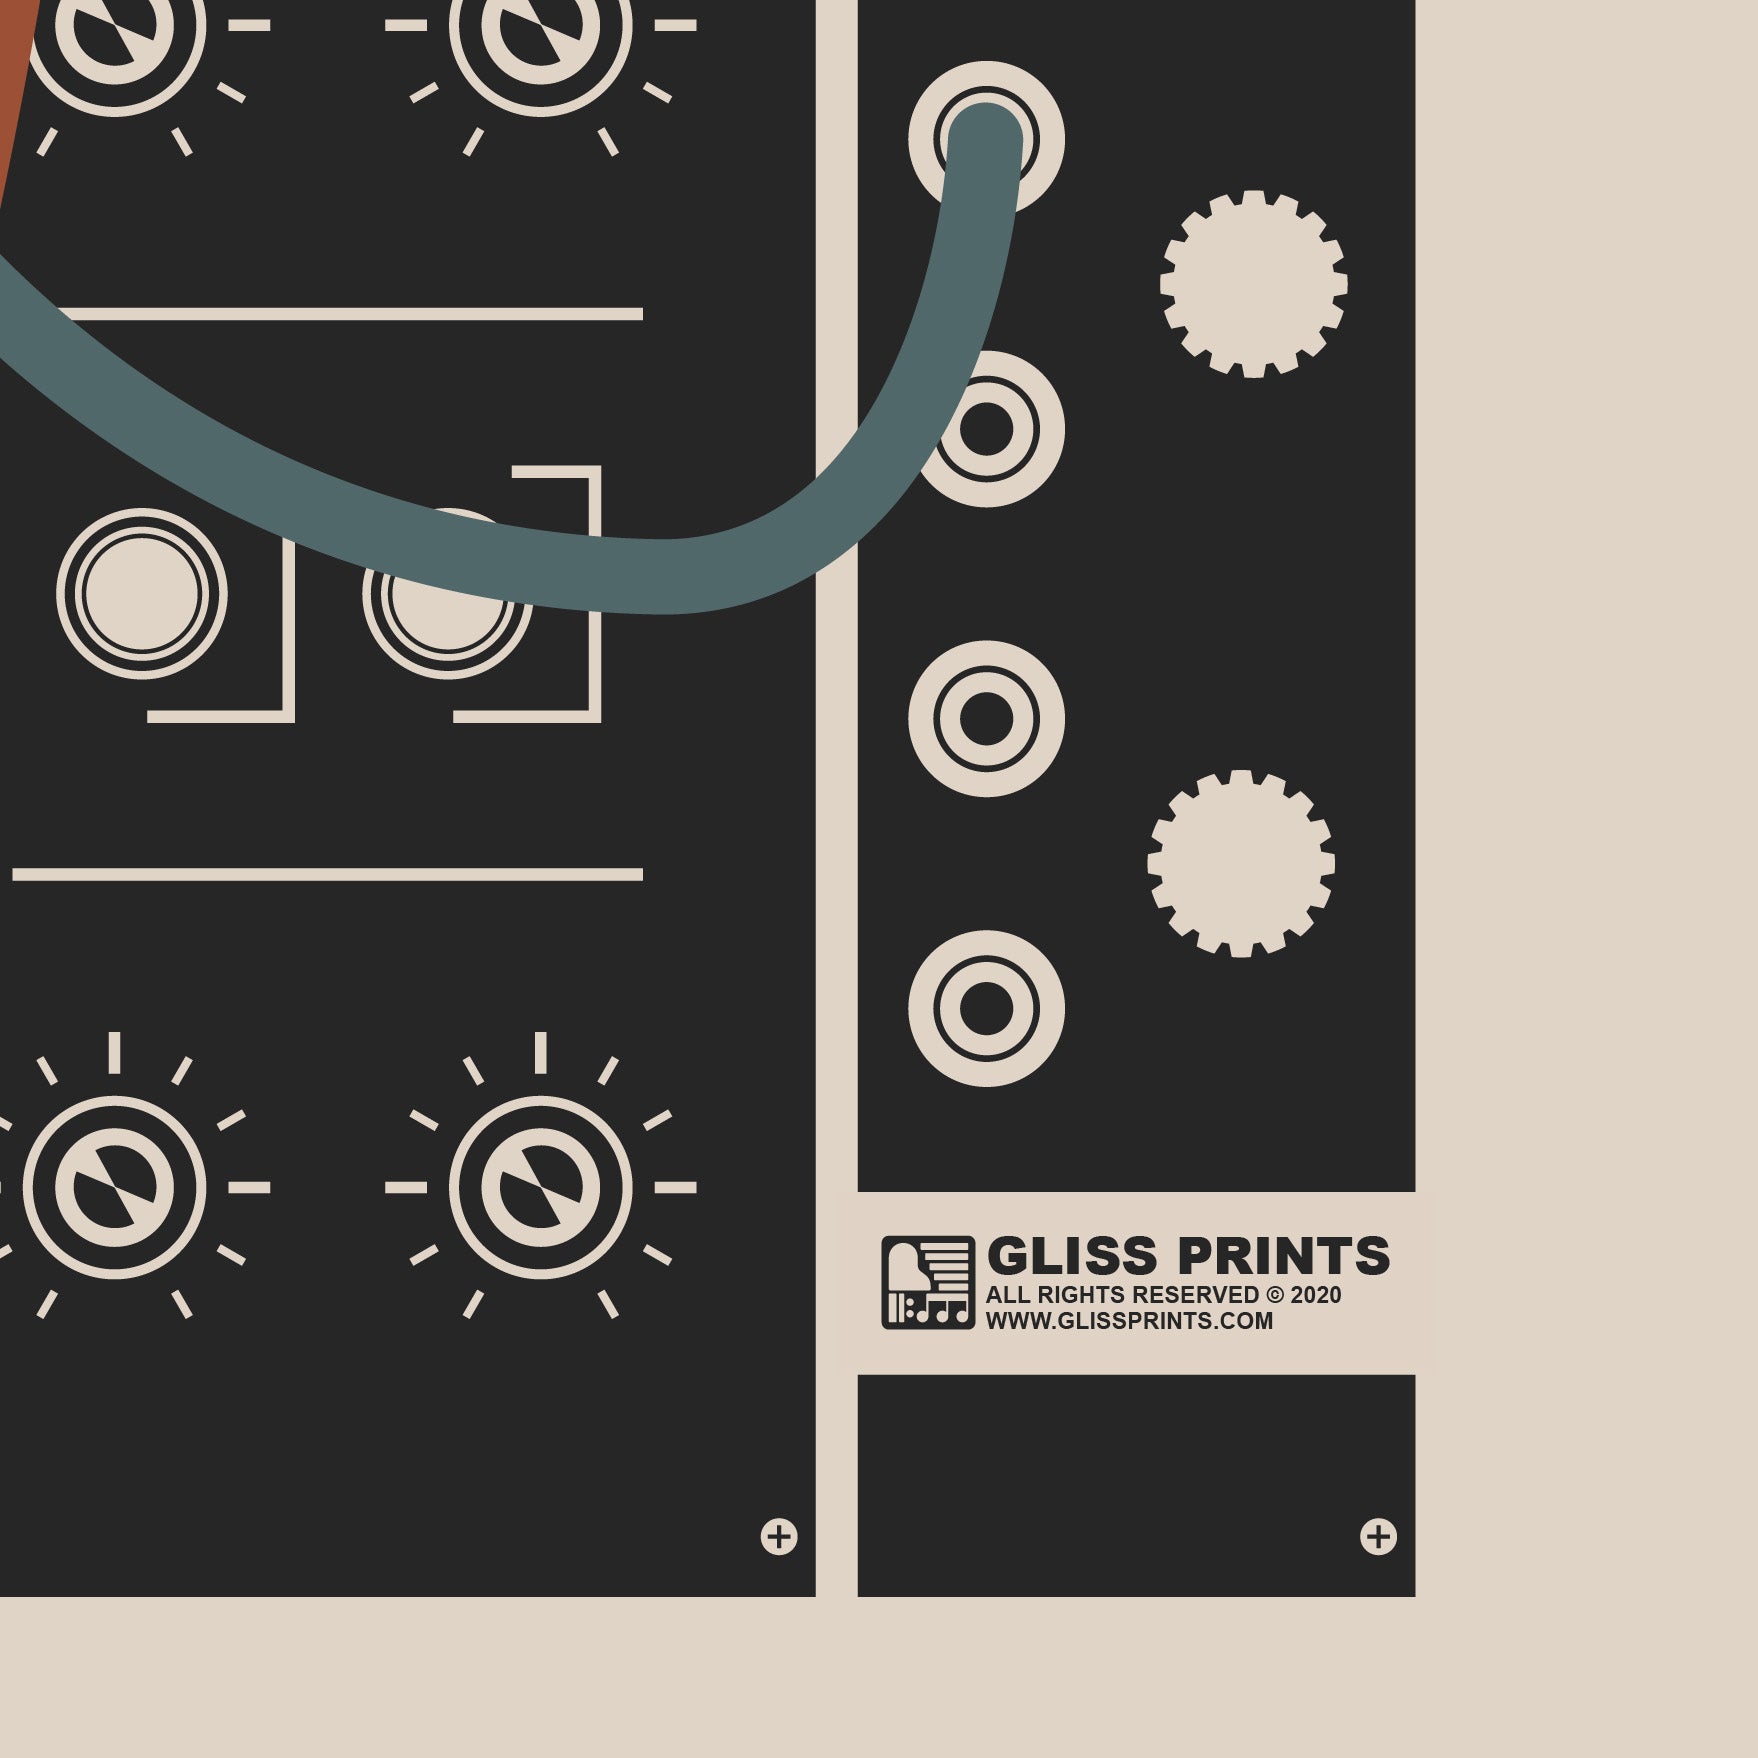 Modular Synthesizer Poster, Eurorack Inspired Print, Cream